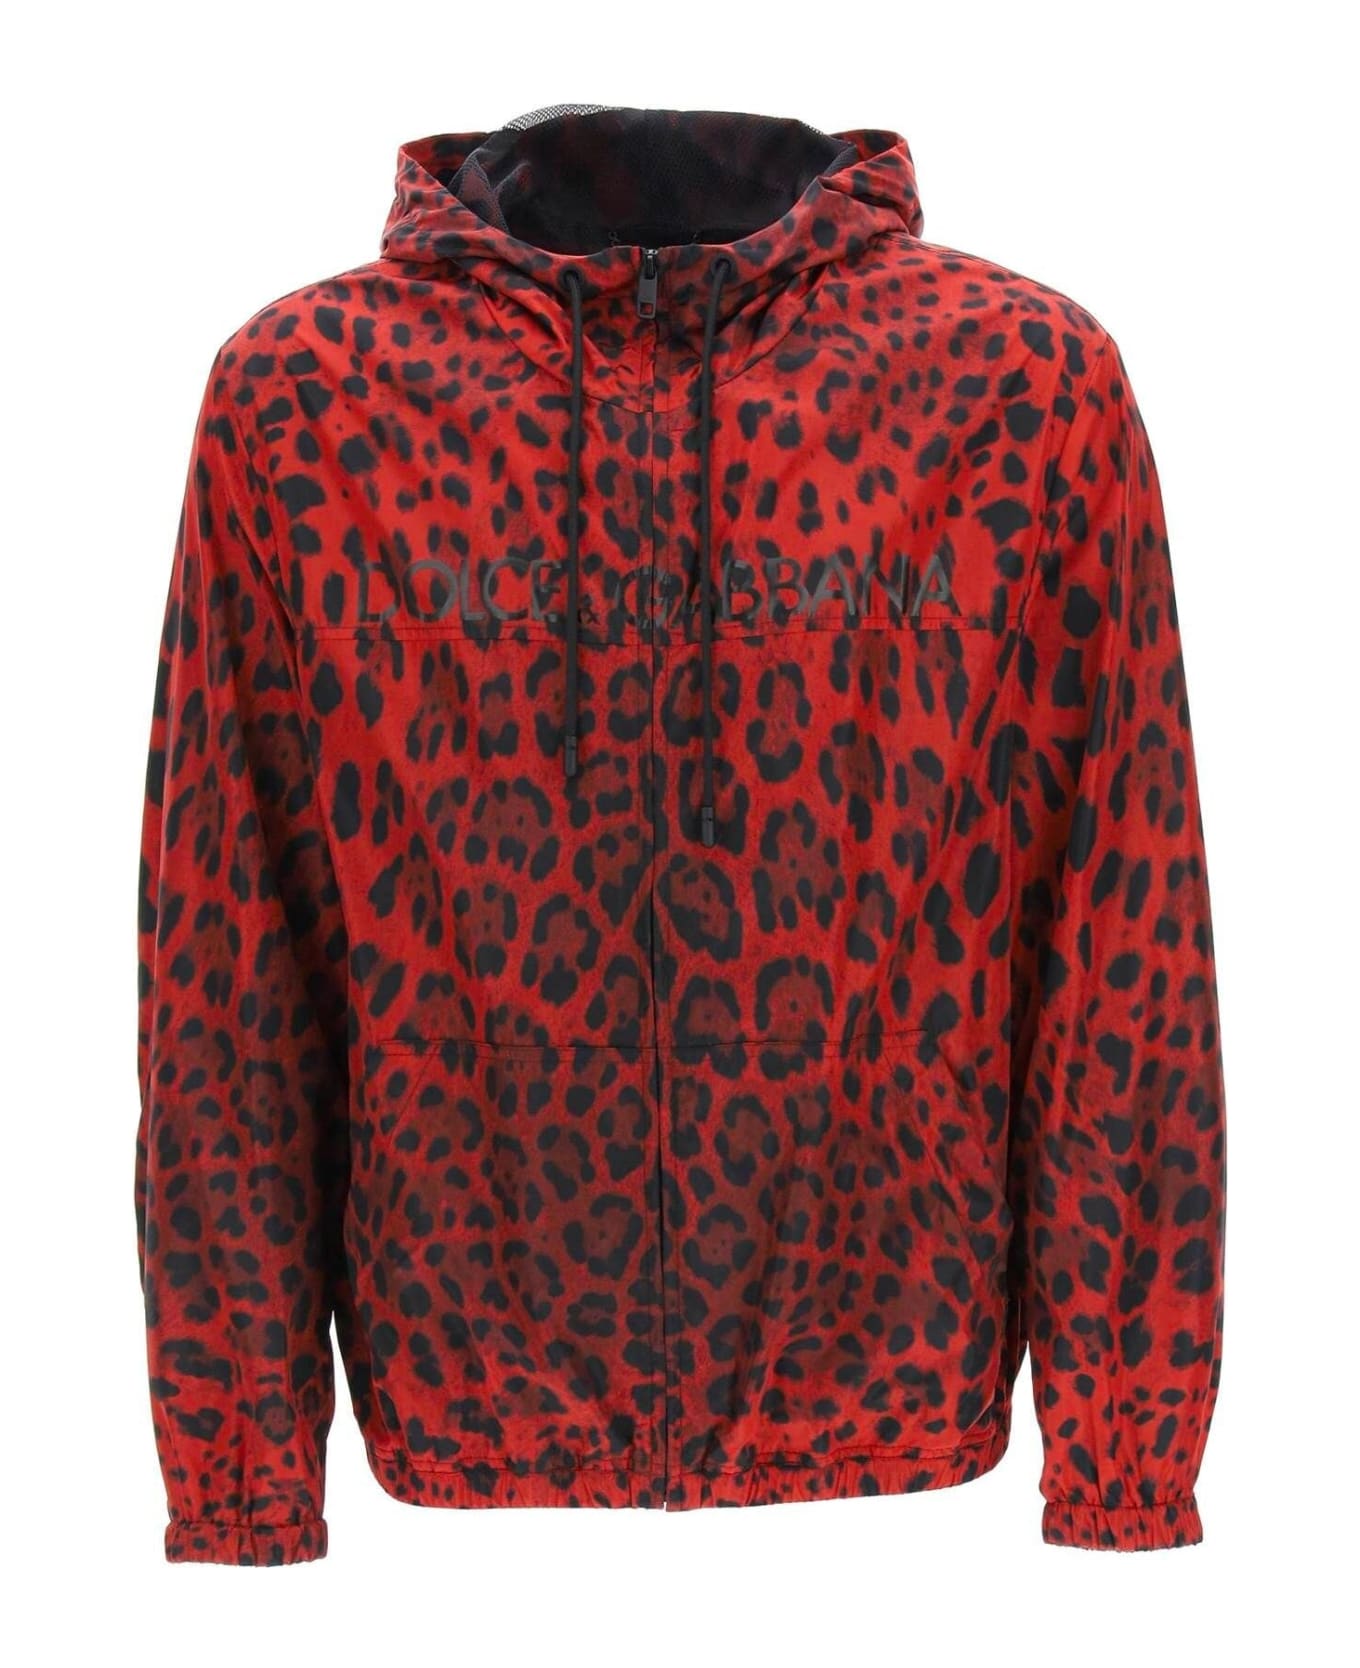 Dolce & Gabbana Jacket With Animal Print - Red ジャケット